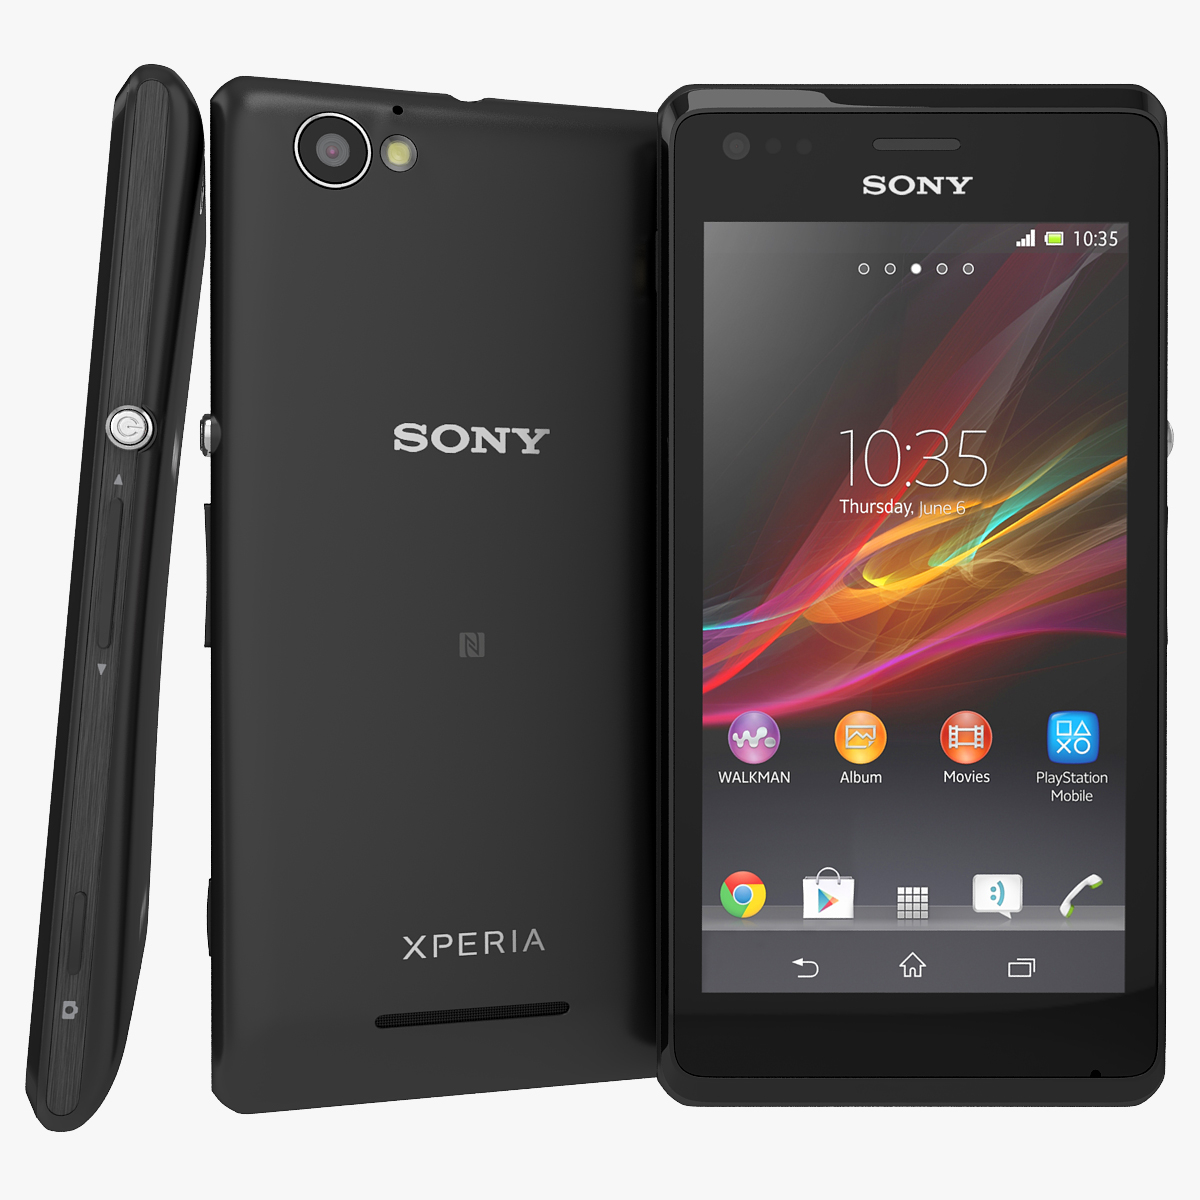 Звук xperia. Sony Xperia c2005. Sony Xperia m c2005. Sony Xperia c1905. Sony Xperia c6503.